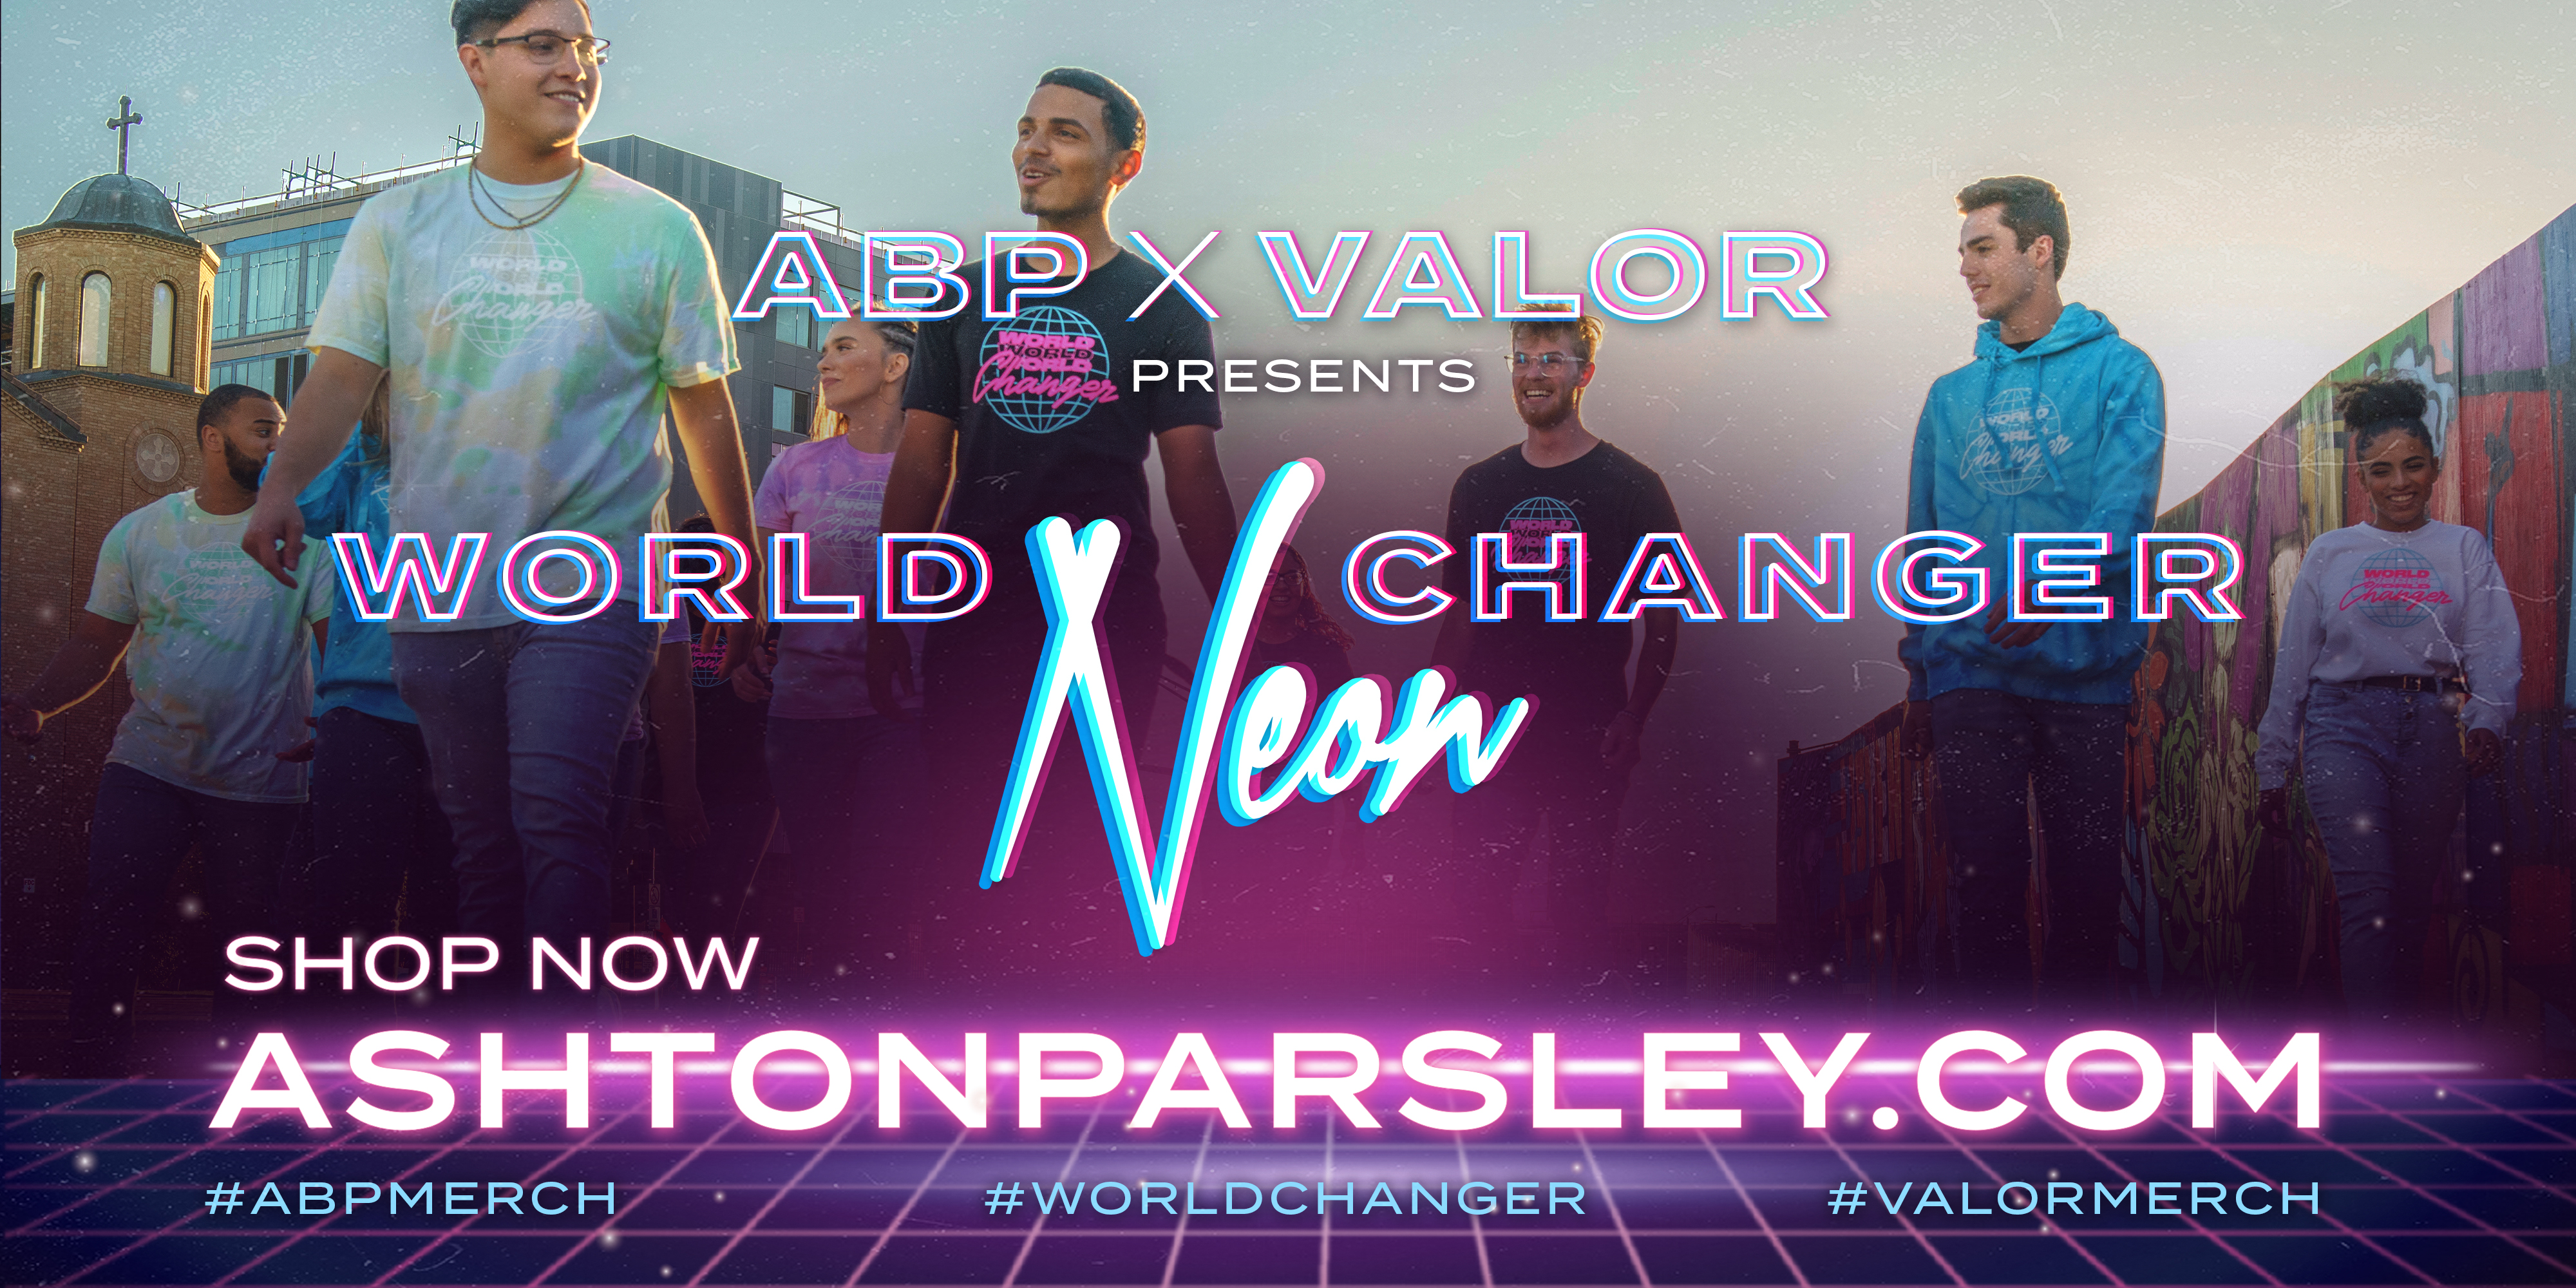 ABP X Valor PResents World Changer Neon Shop Now ashtonparsley.com #ABPMERCH #WORLDCHANGER #VALORMERCH